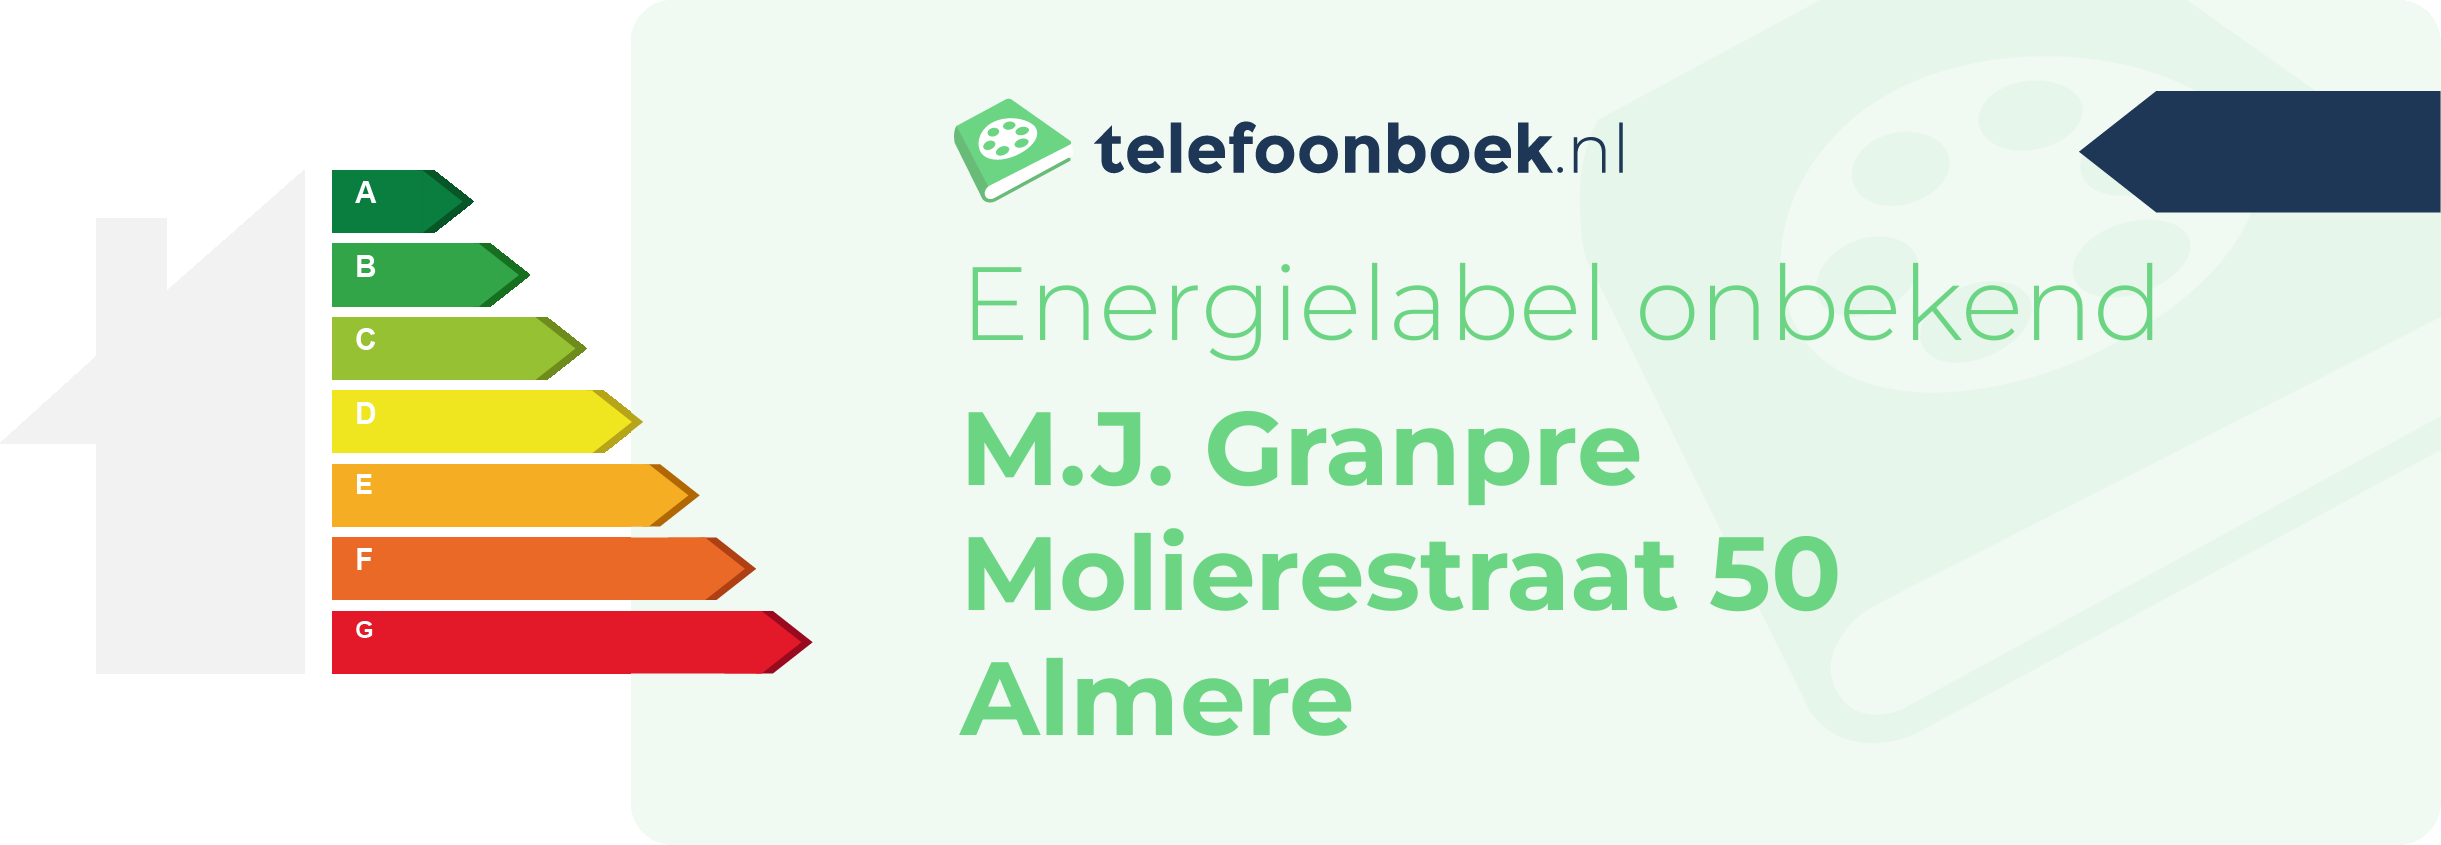 Energielabel M.J. Granpre Molierestraat 50 Almere